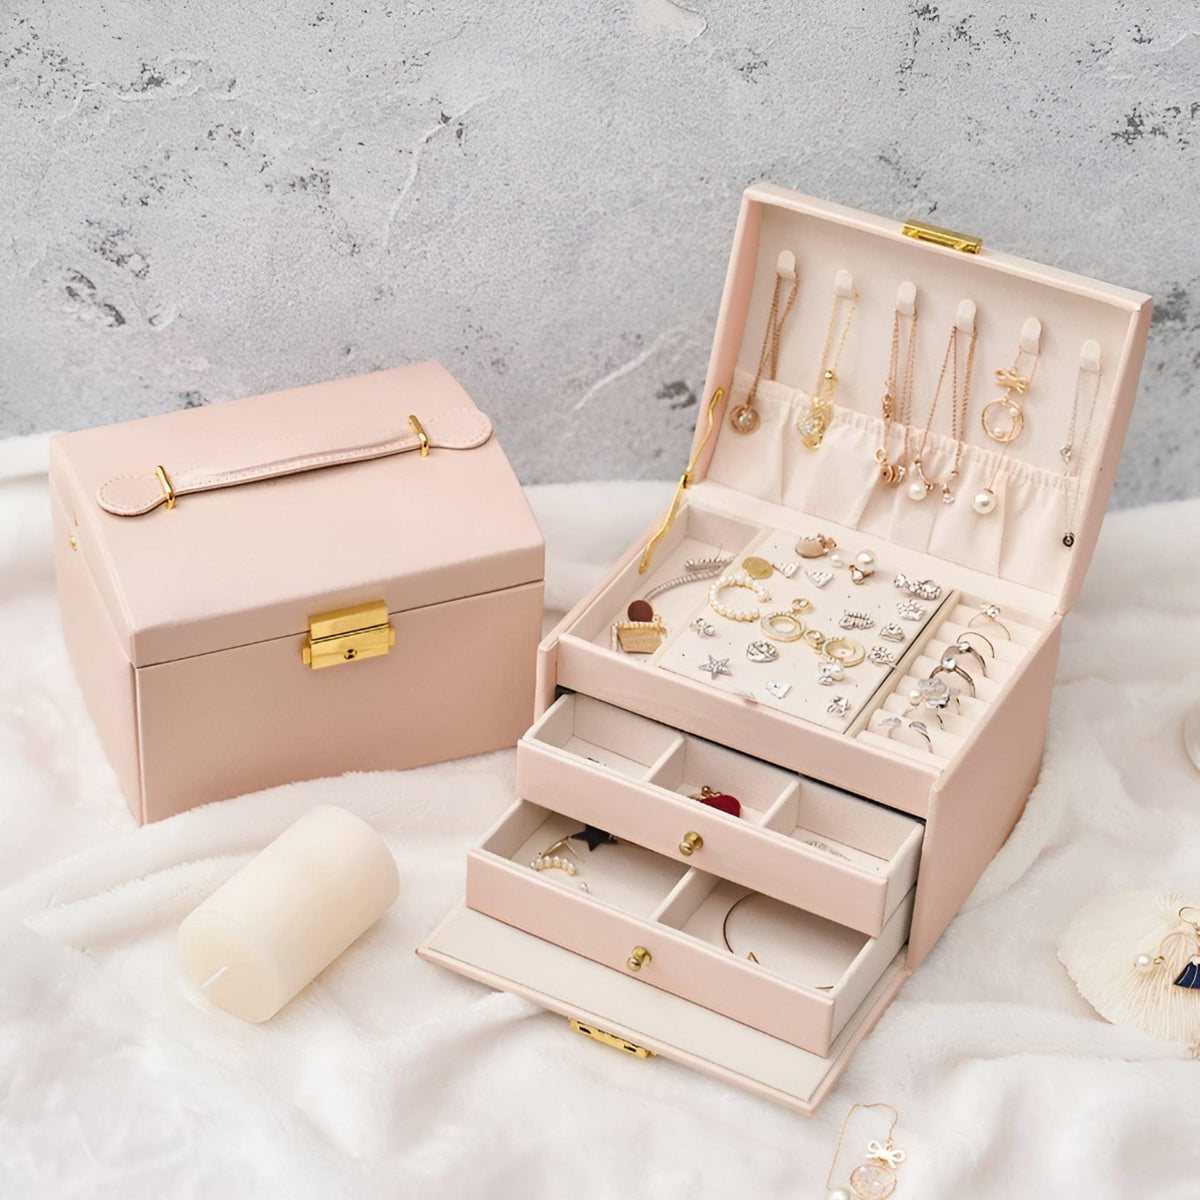 Pink Jewelry Box